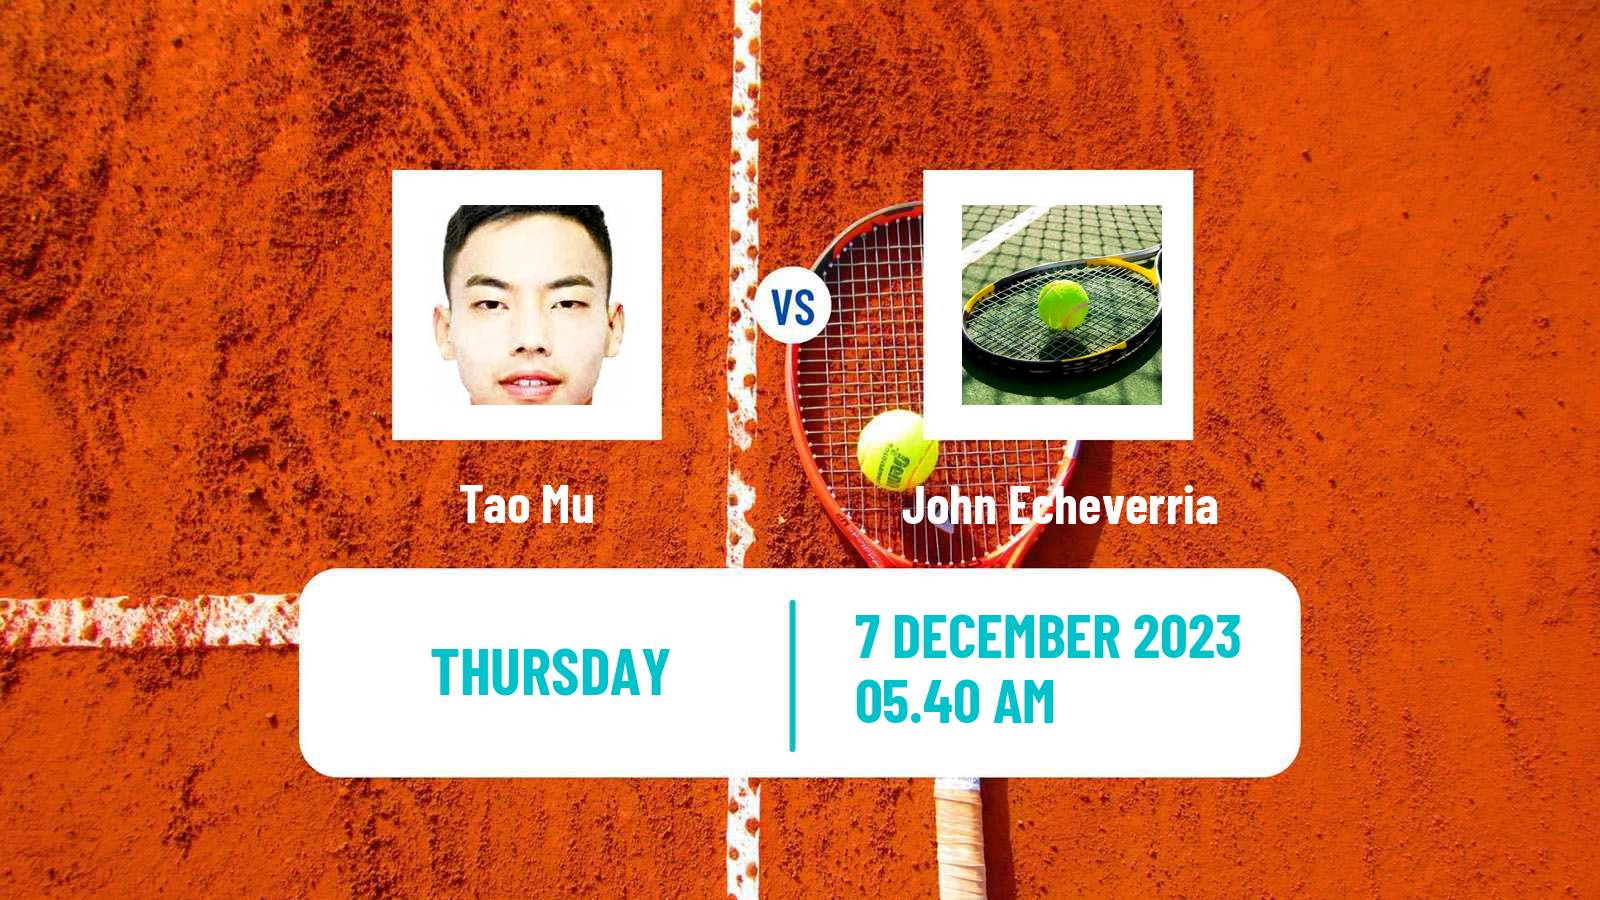 Tennis ITF M15 Madrid 3 Men Tao Mu - John Echeverria